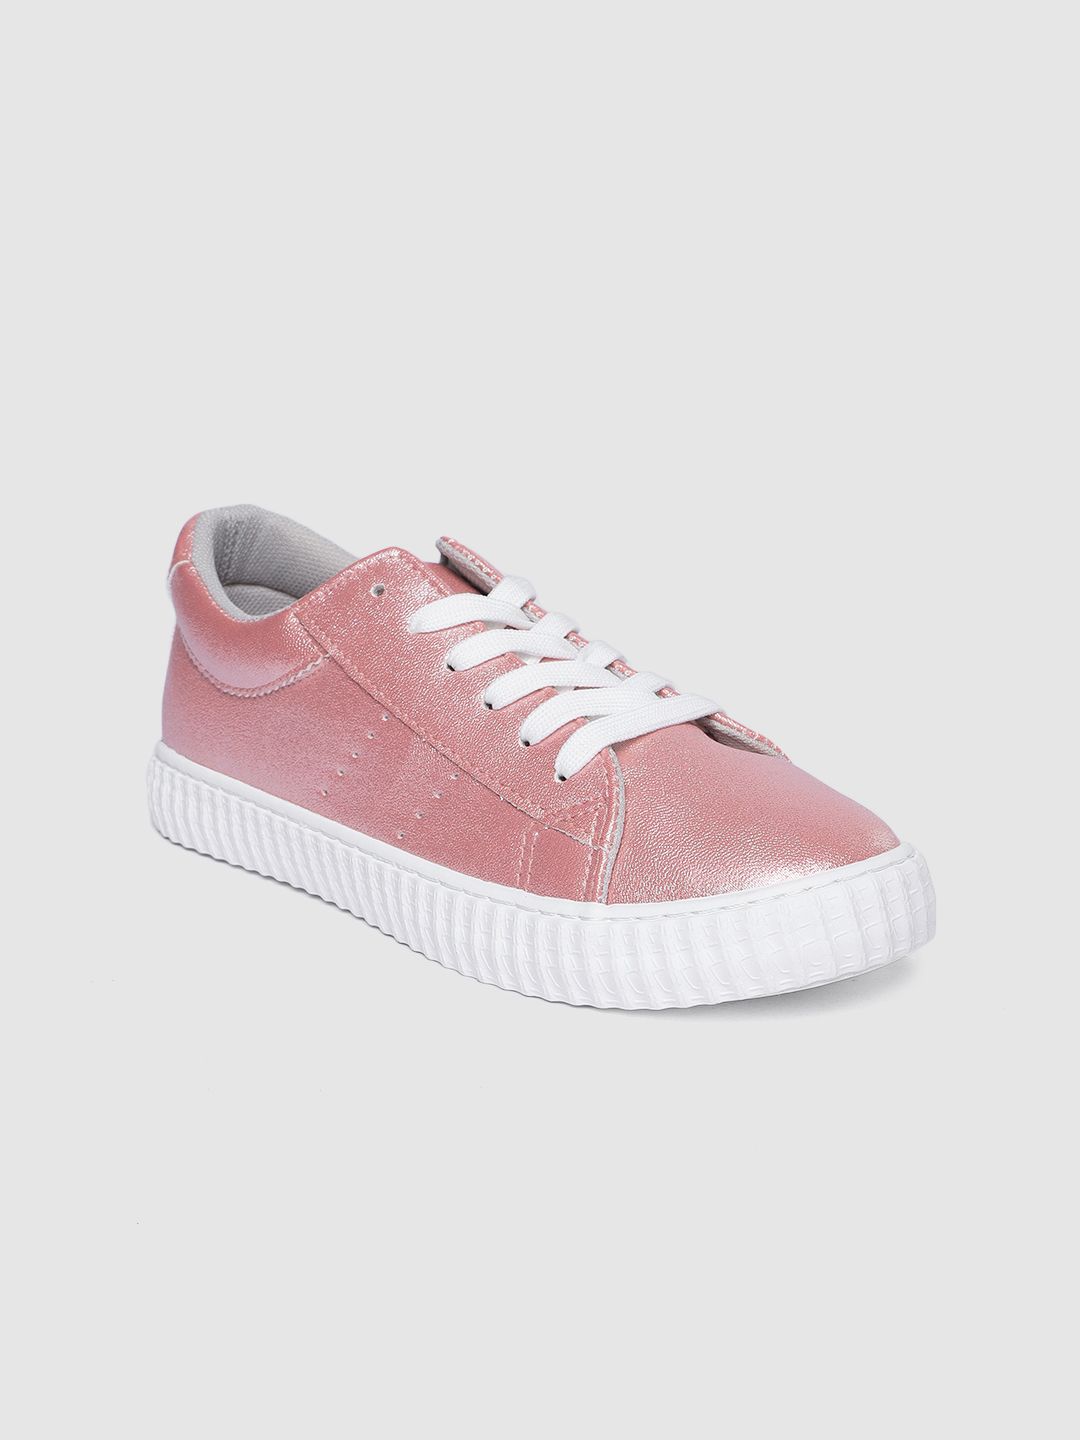 Allen Solly Women Pink Solid Sneakers Price in India